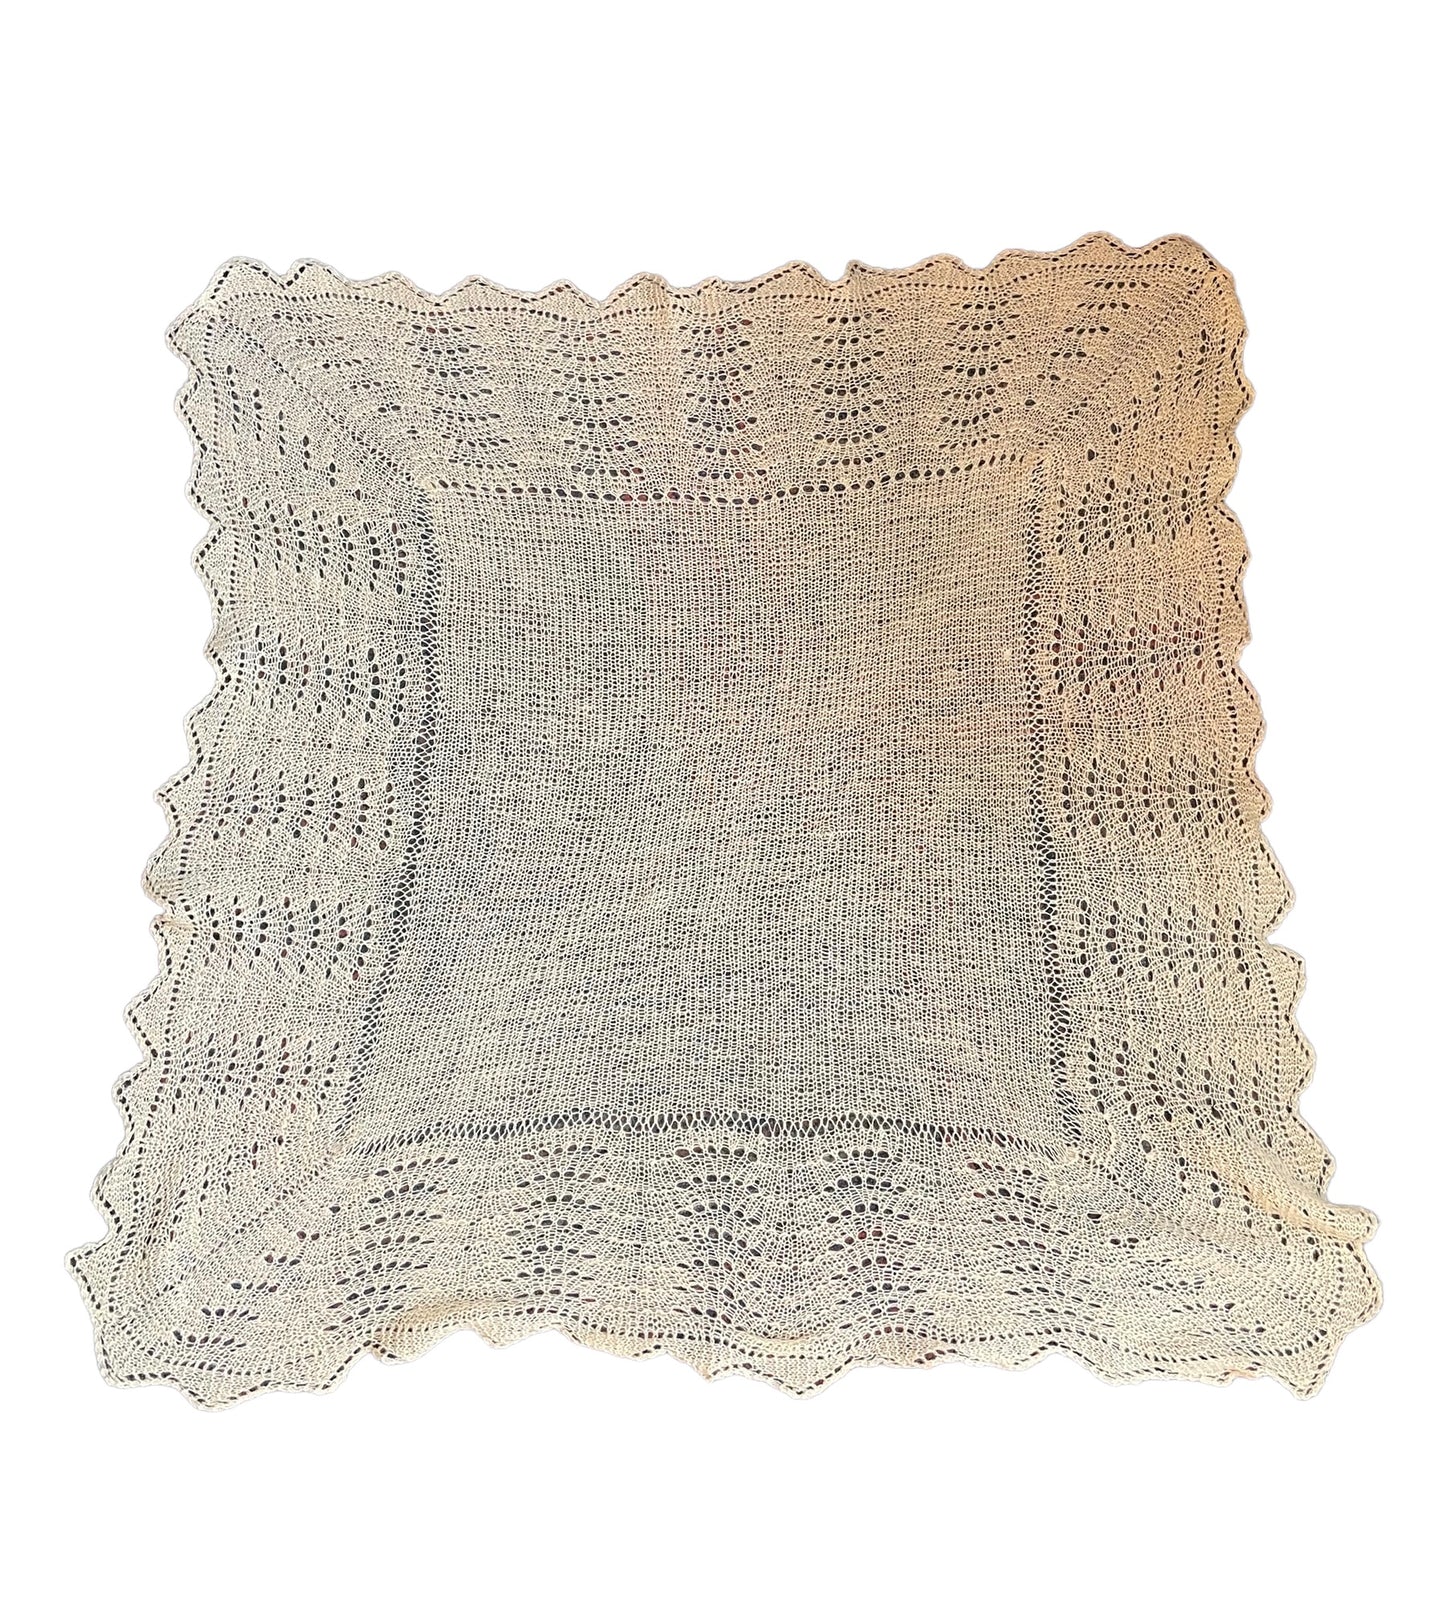 Vintage Lace Knit Scarf